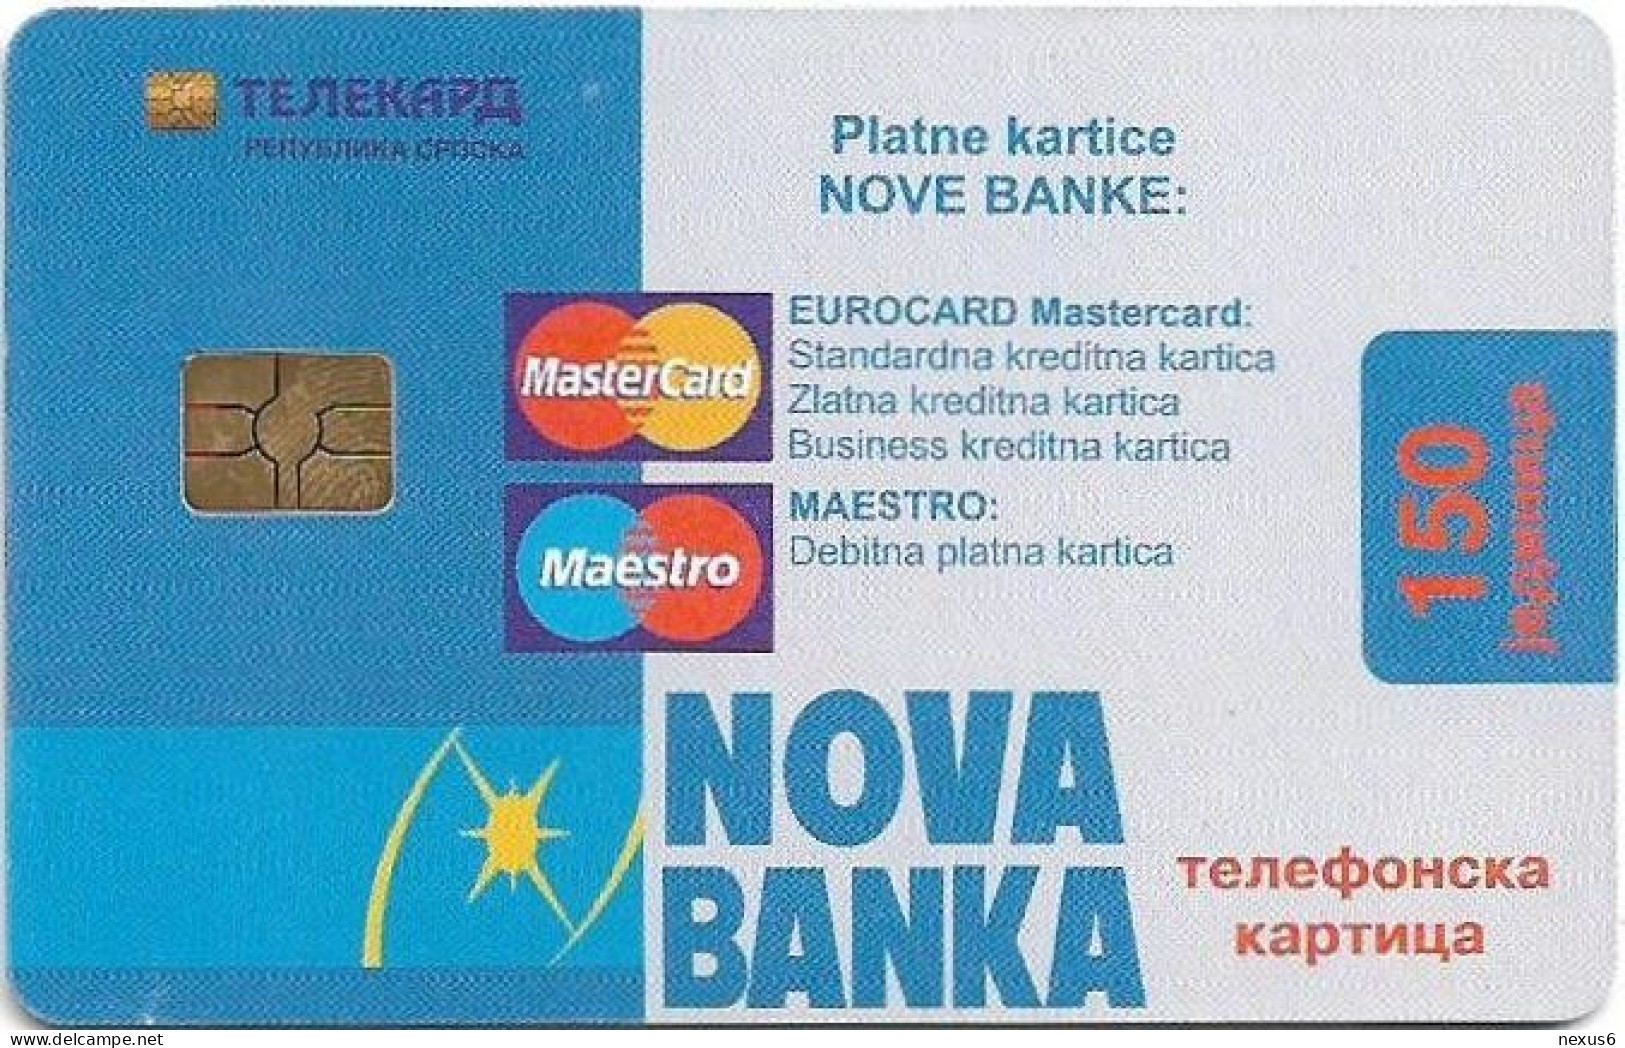 Bosnia - Republika Srpska - Nova Banka - Mastercard 1, Gem5 Red, 01.2005, 150Units, Used - Bosnia